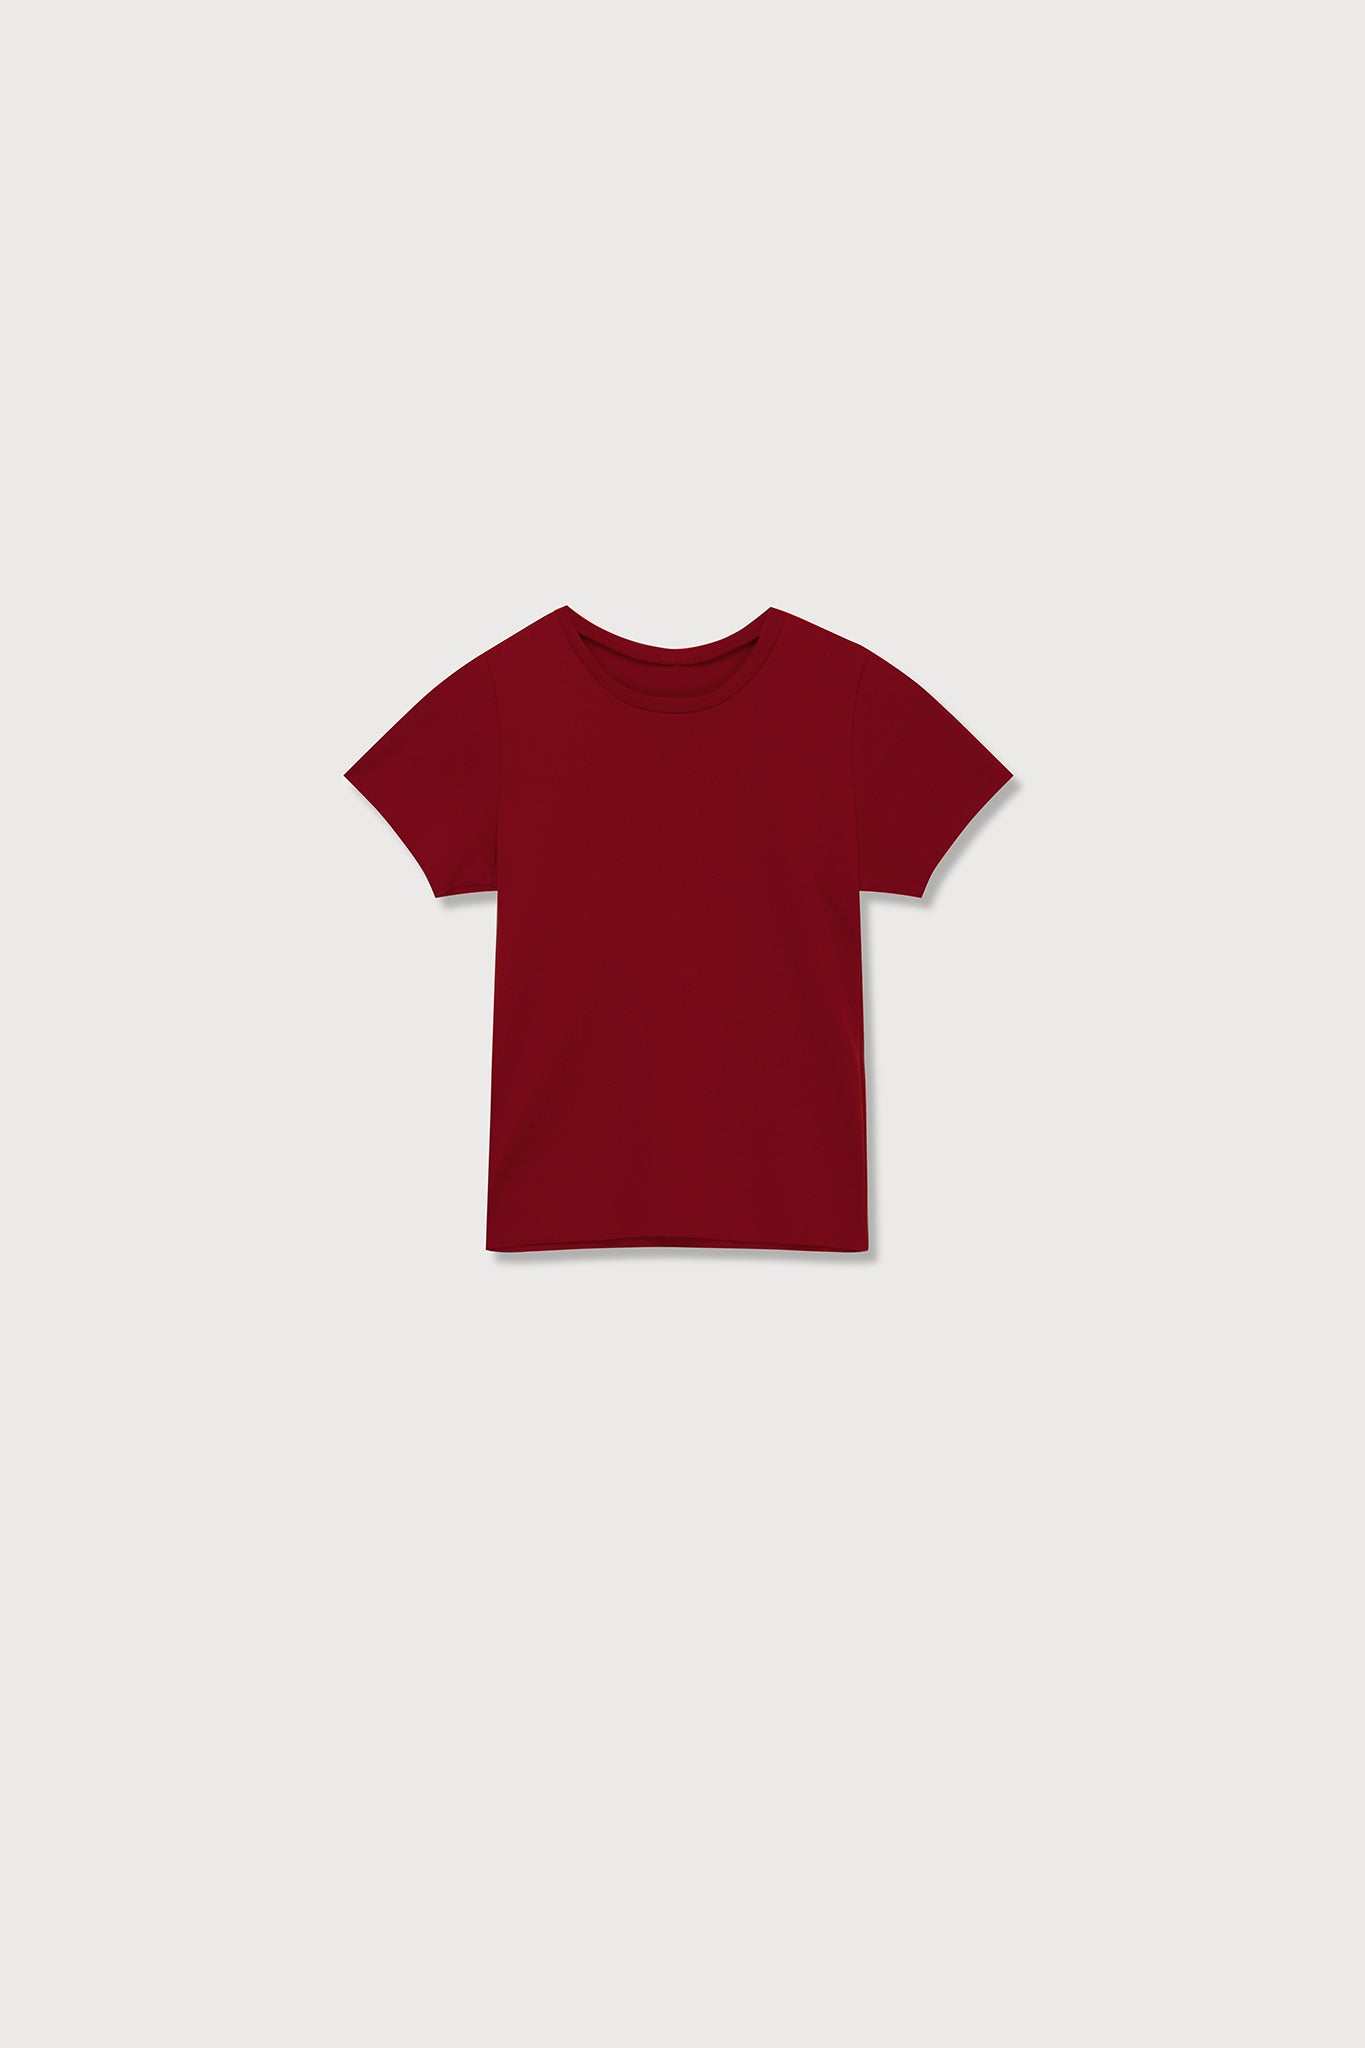 A.BCH A.35 Garnet Rib T-Shirt in Organic Cotton Rib